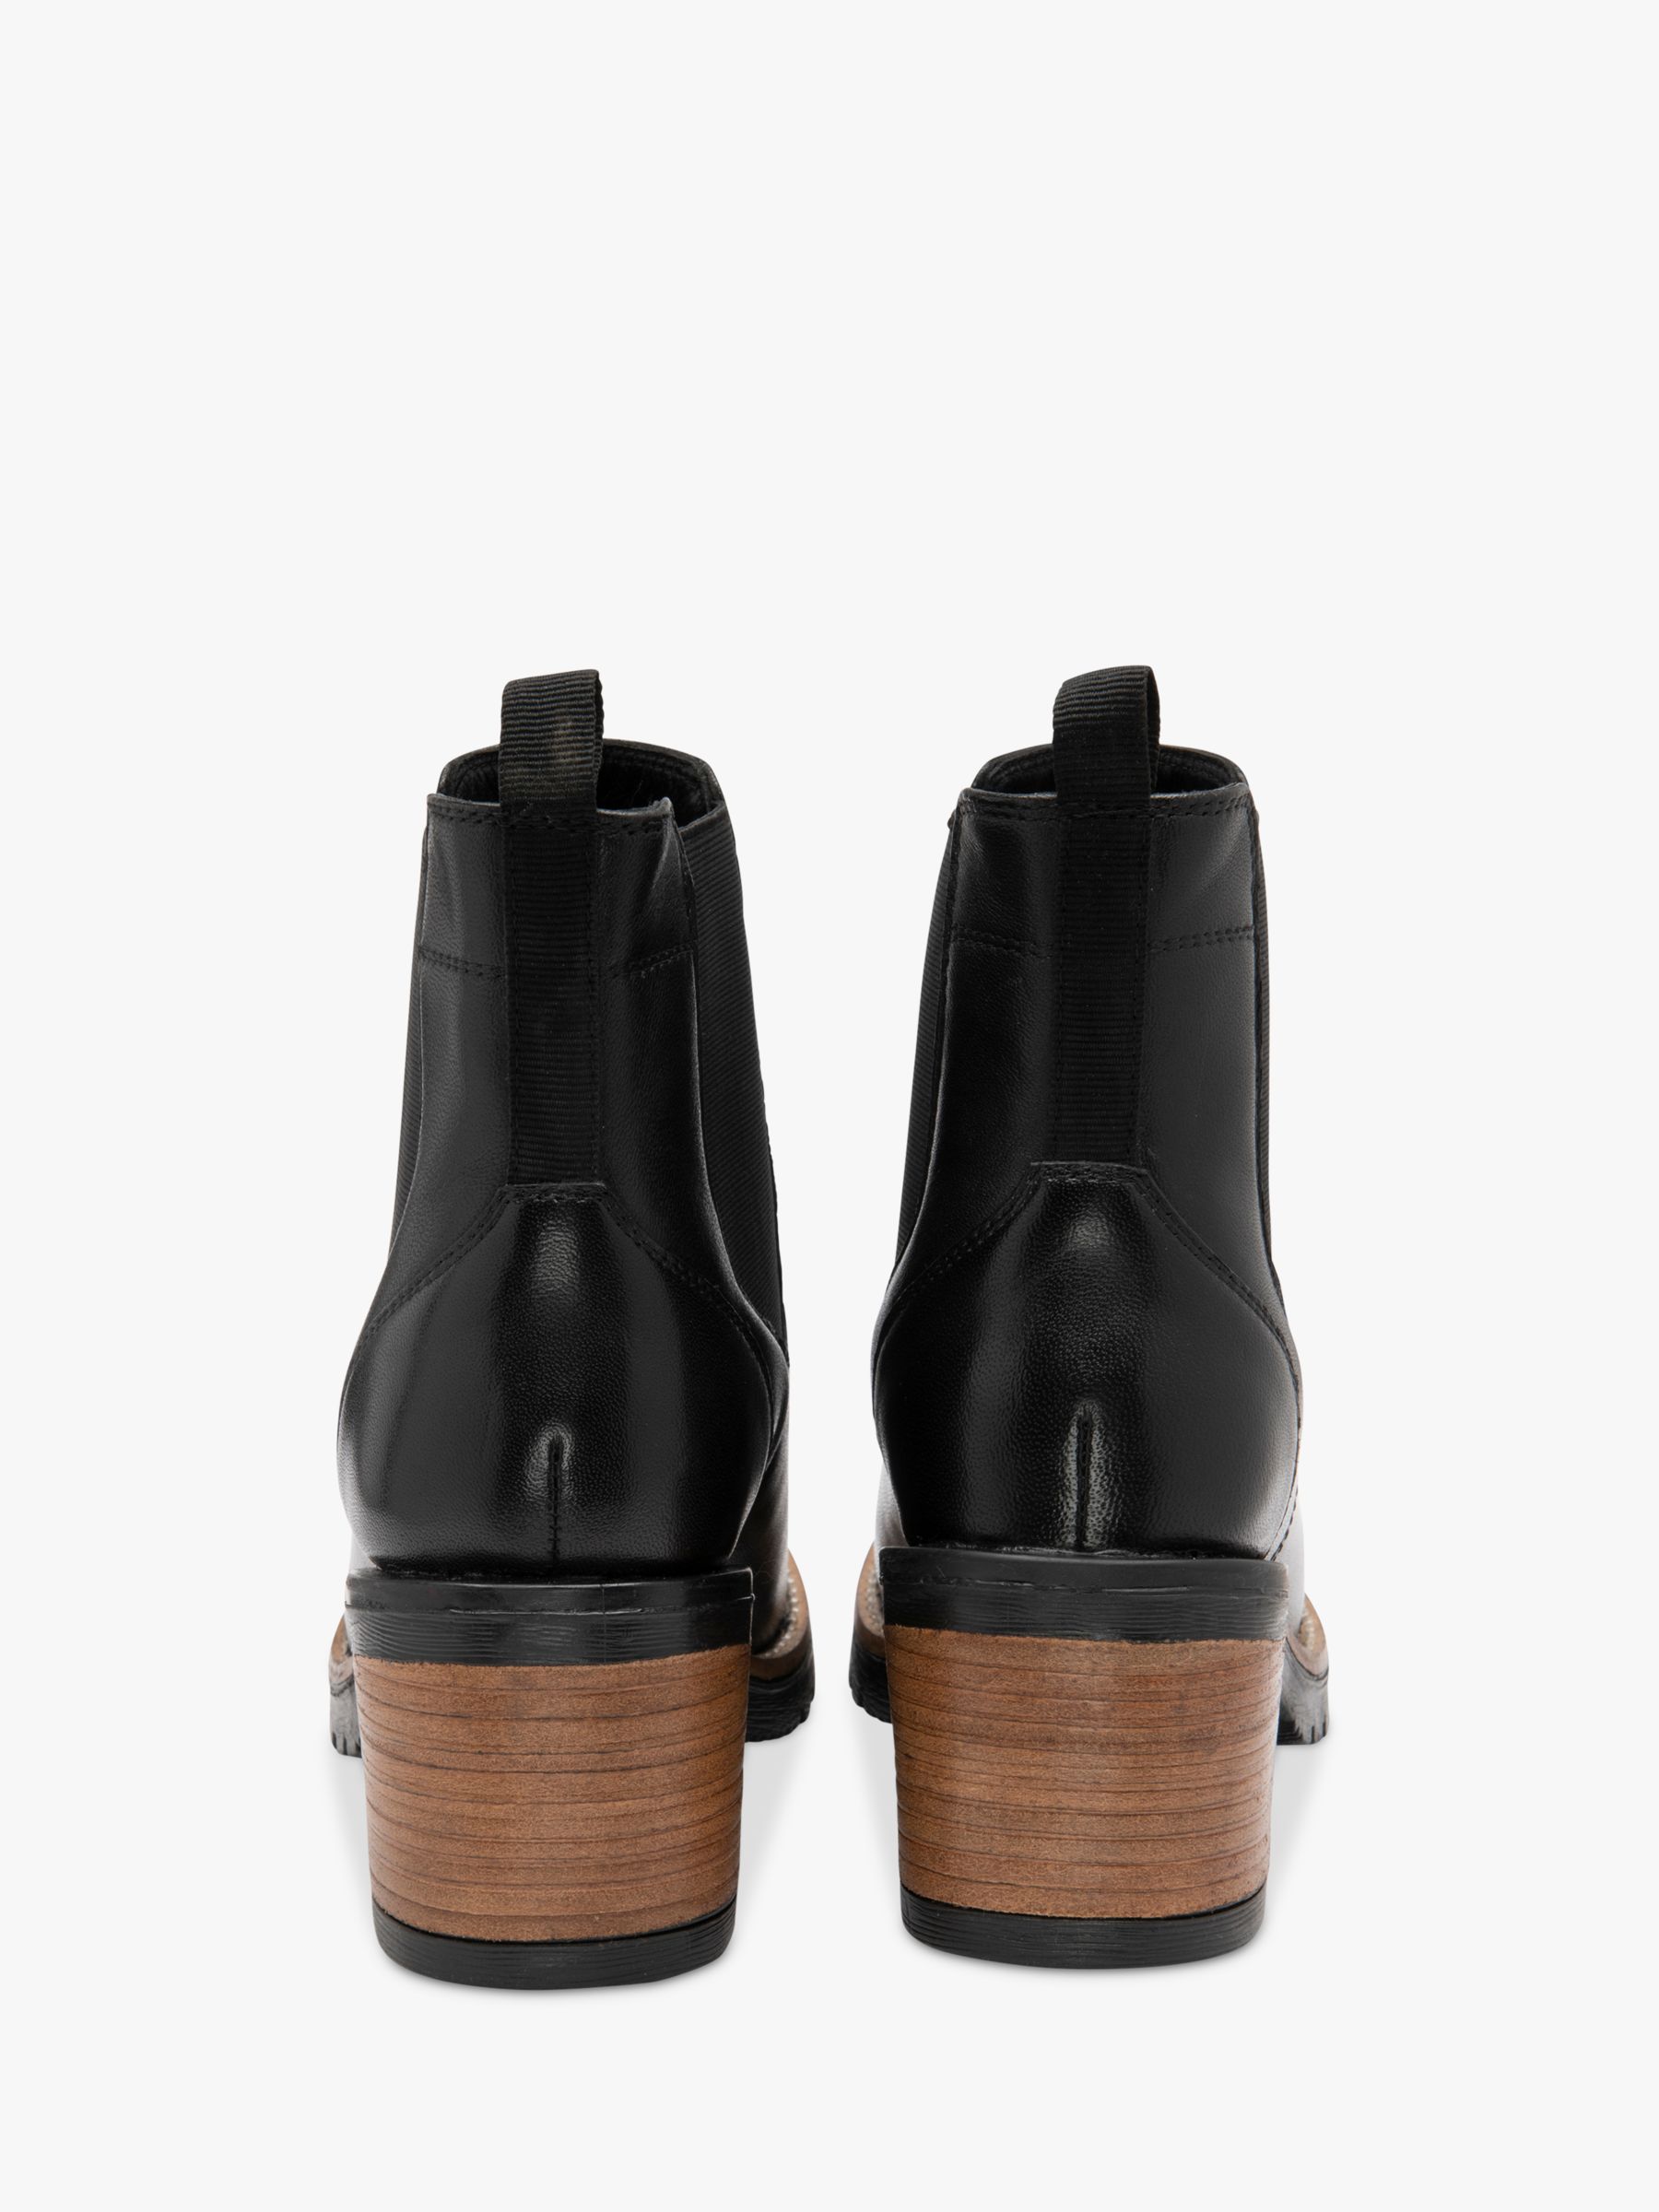 Ravel Bray Leather Block Heel Ankle Boots, Black, 3